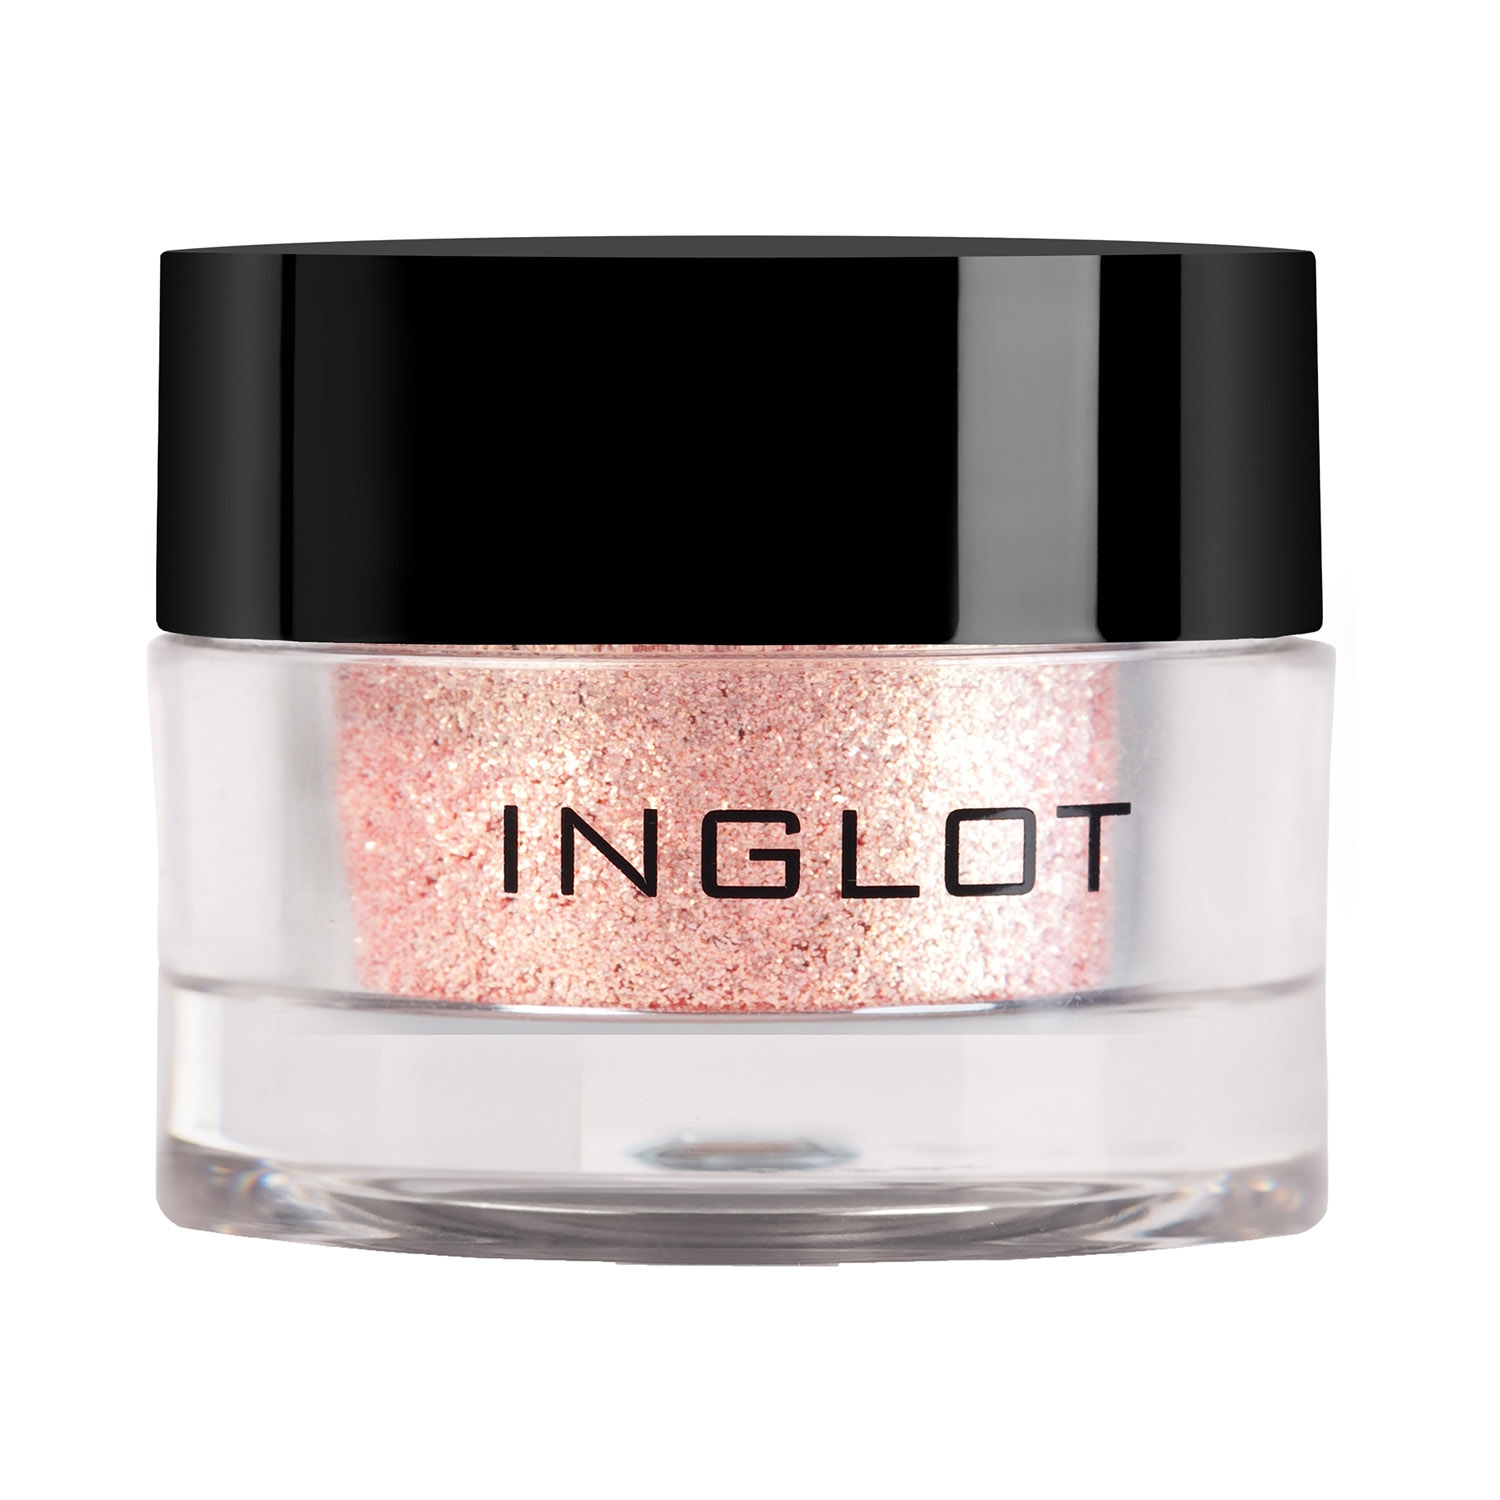 INGLOT | INGLOT Amc Pure Pigment Eye Shadow - 115 Shade (2g)